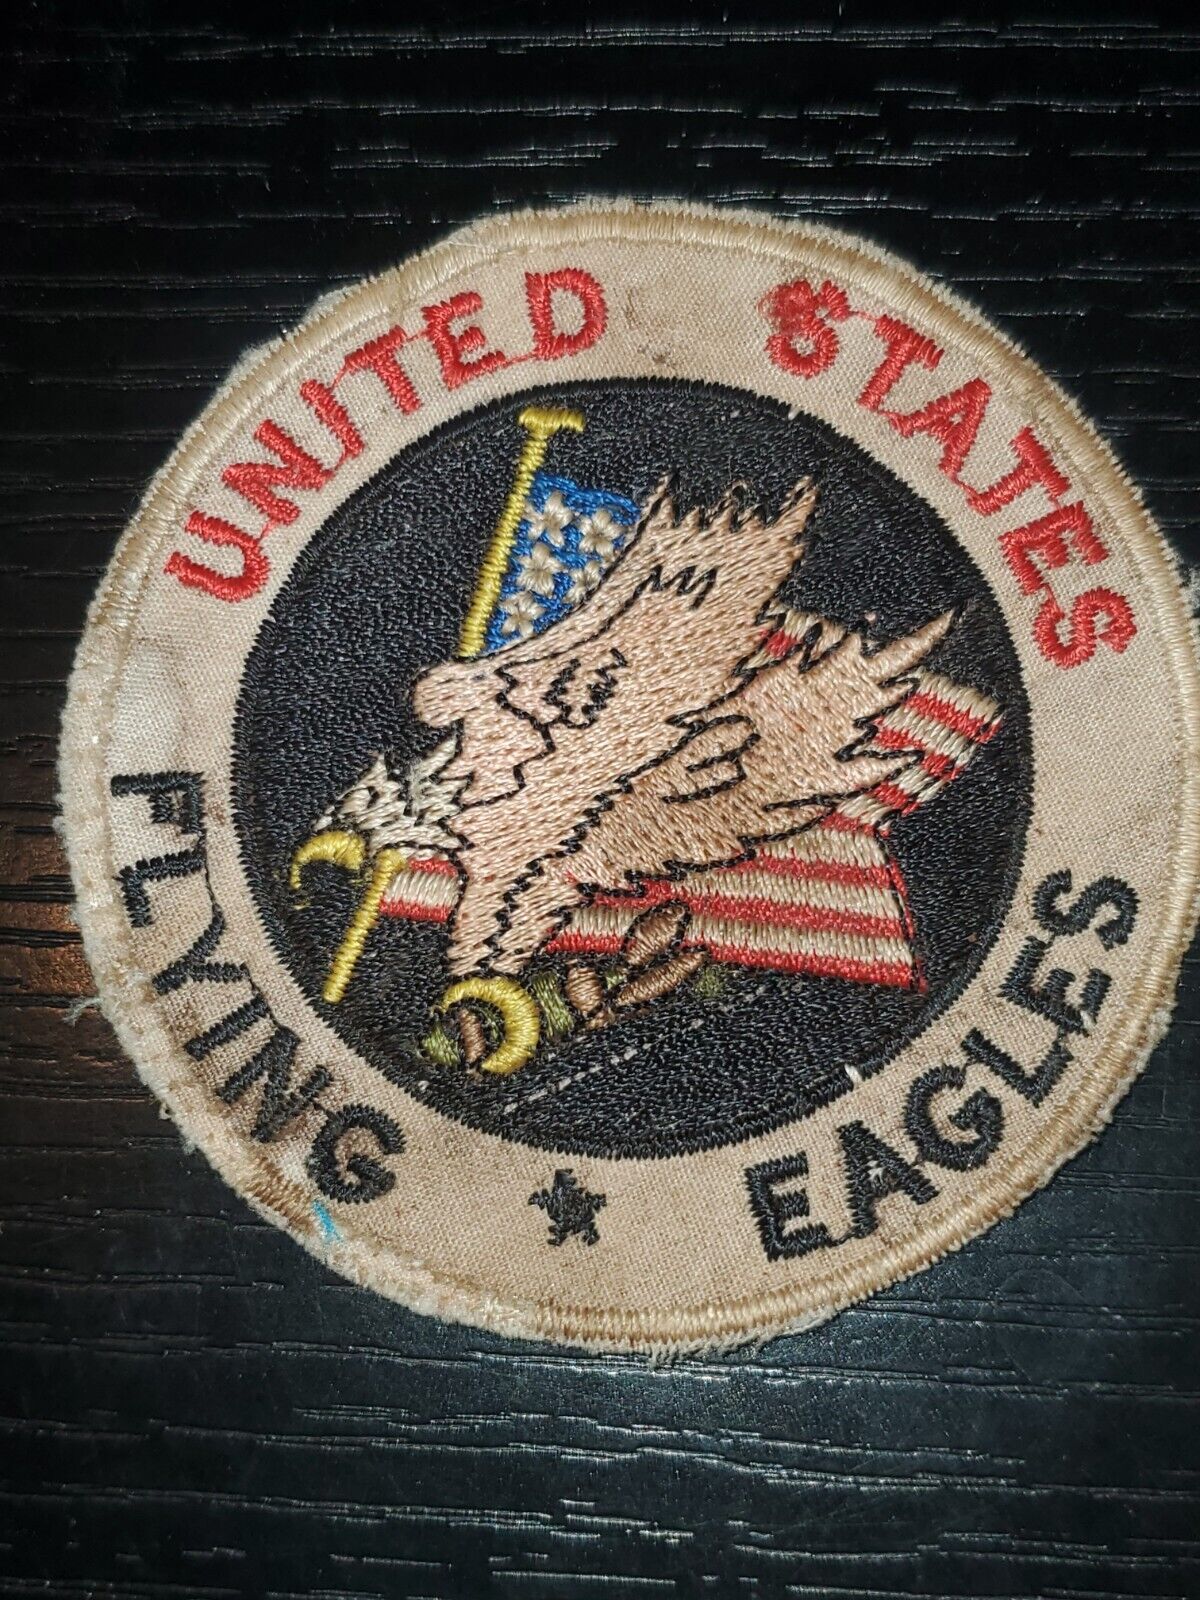 1960s USAF Air Force Cold War Vietnam Era Flying Eagle Squadron Patch L@@K